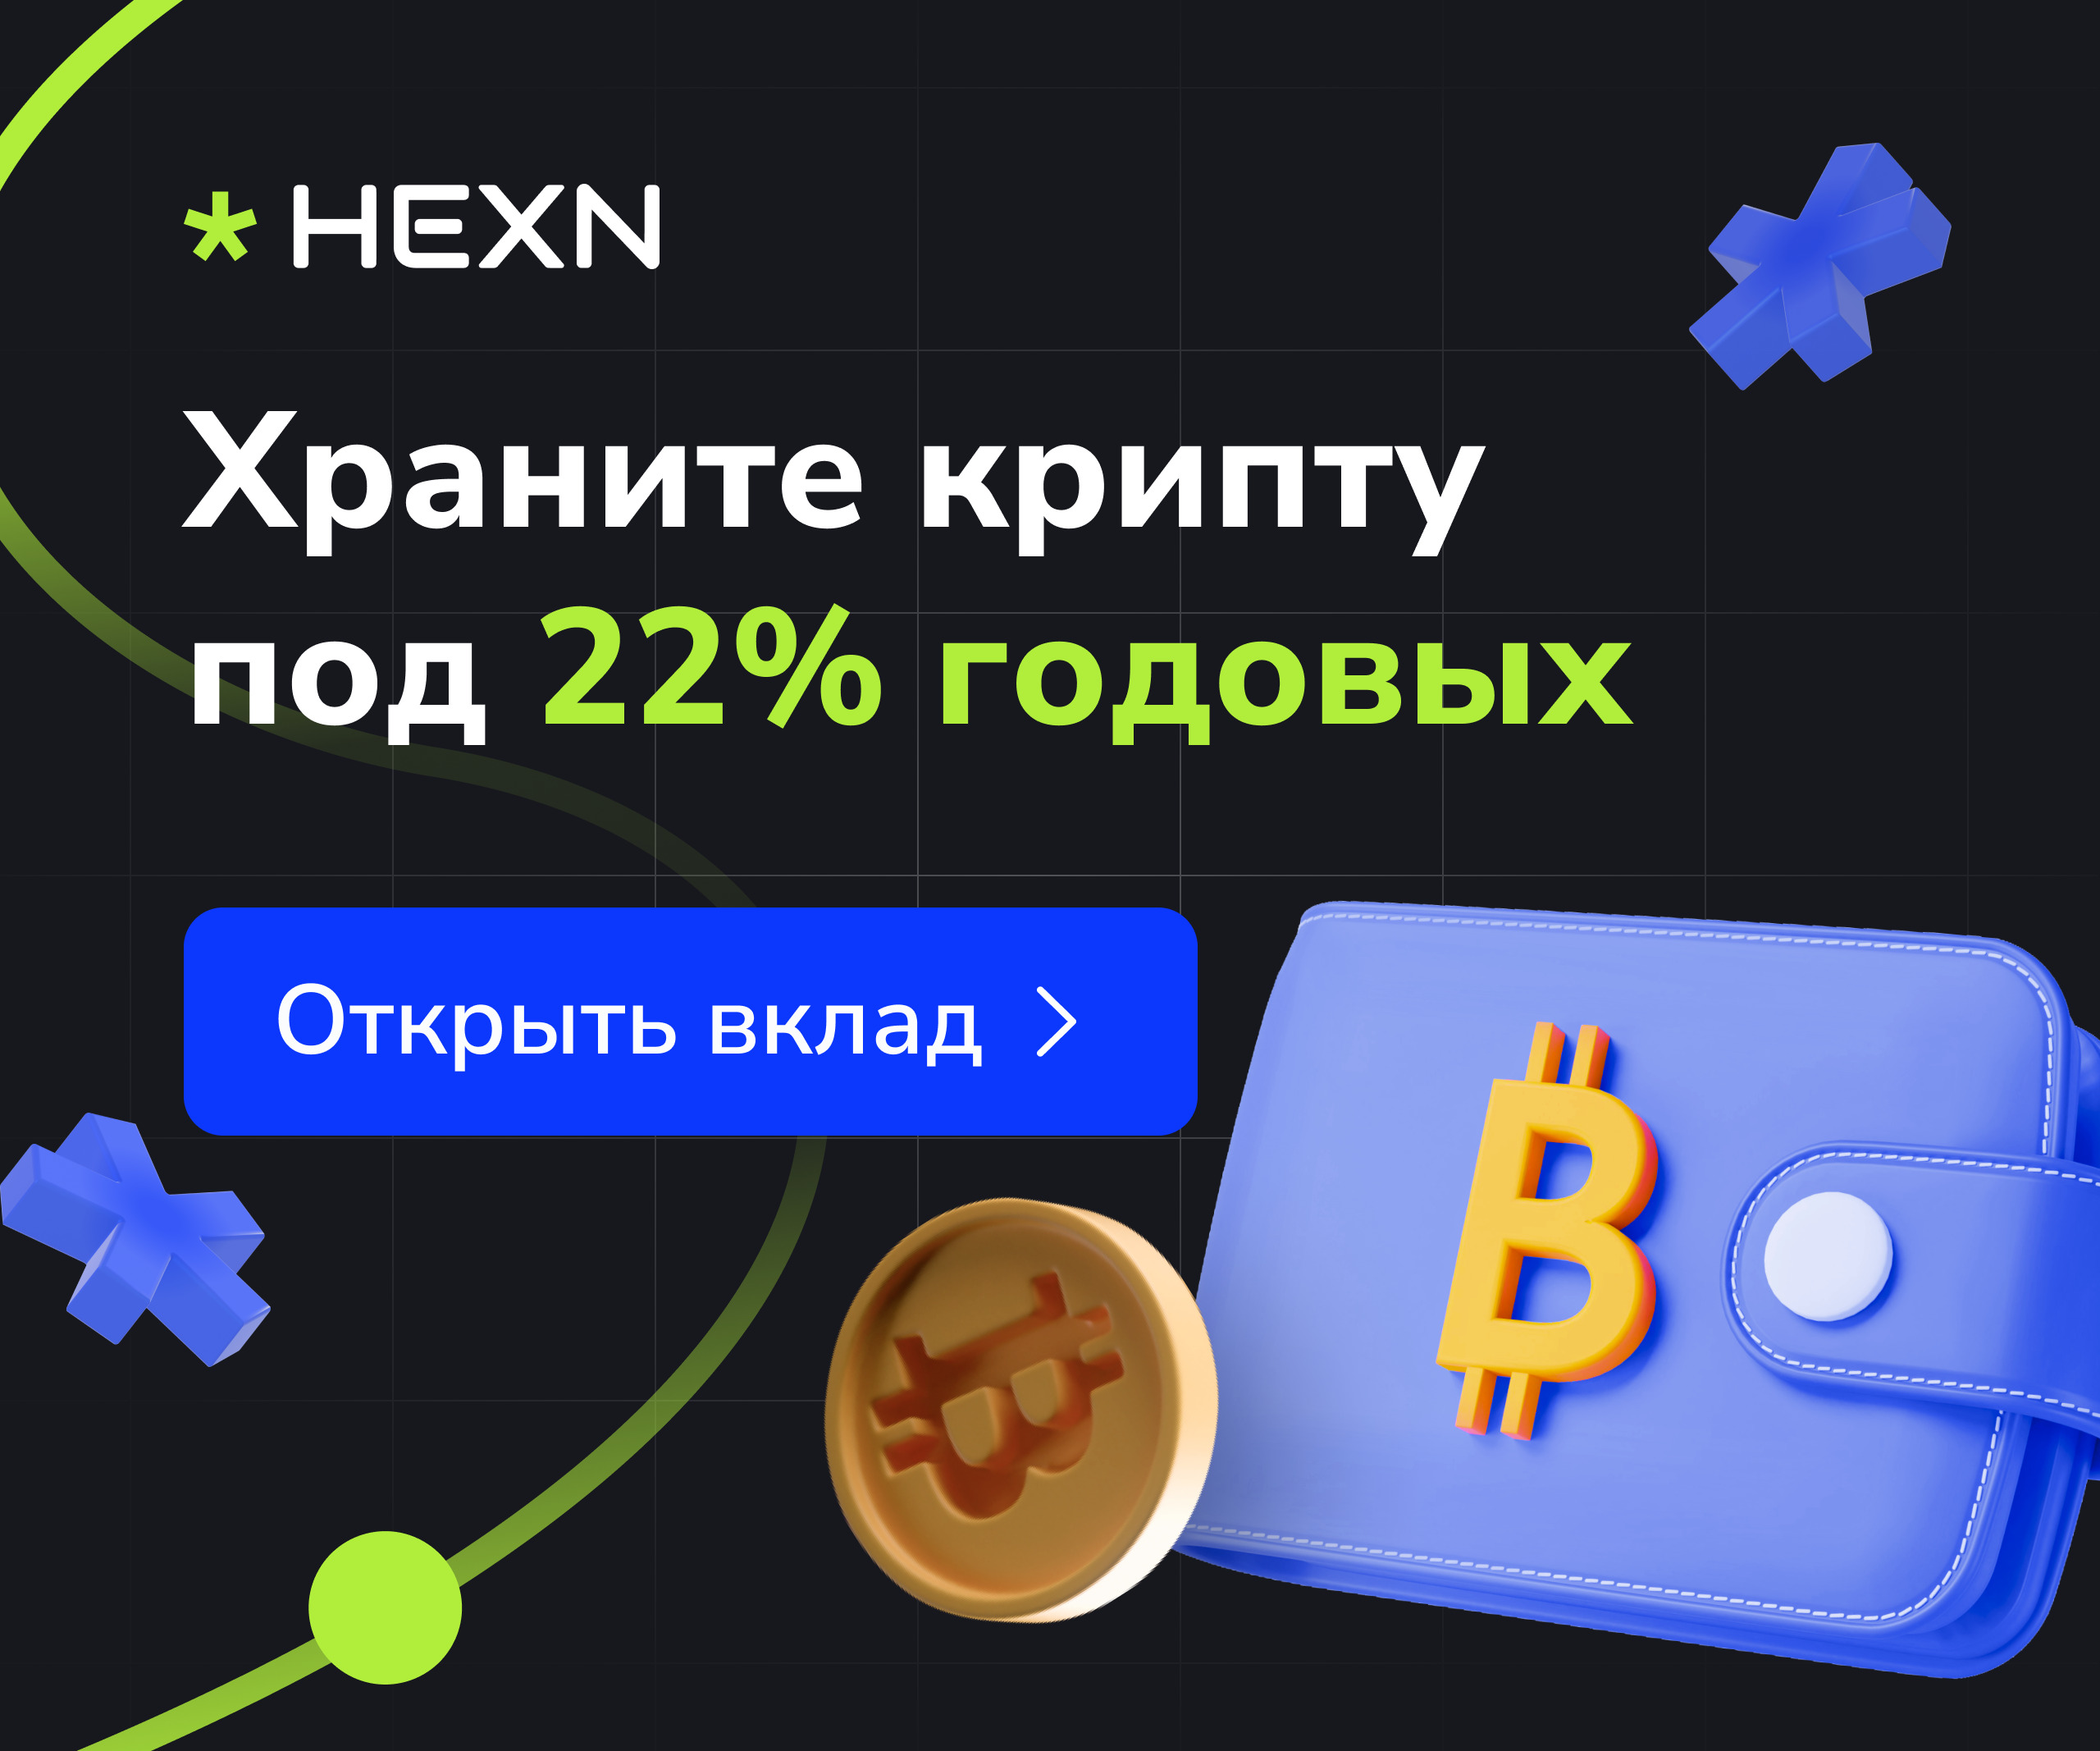 hexn.io - депозиты в крипте